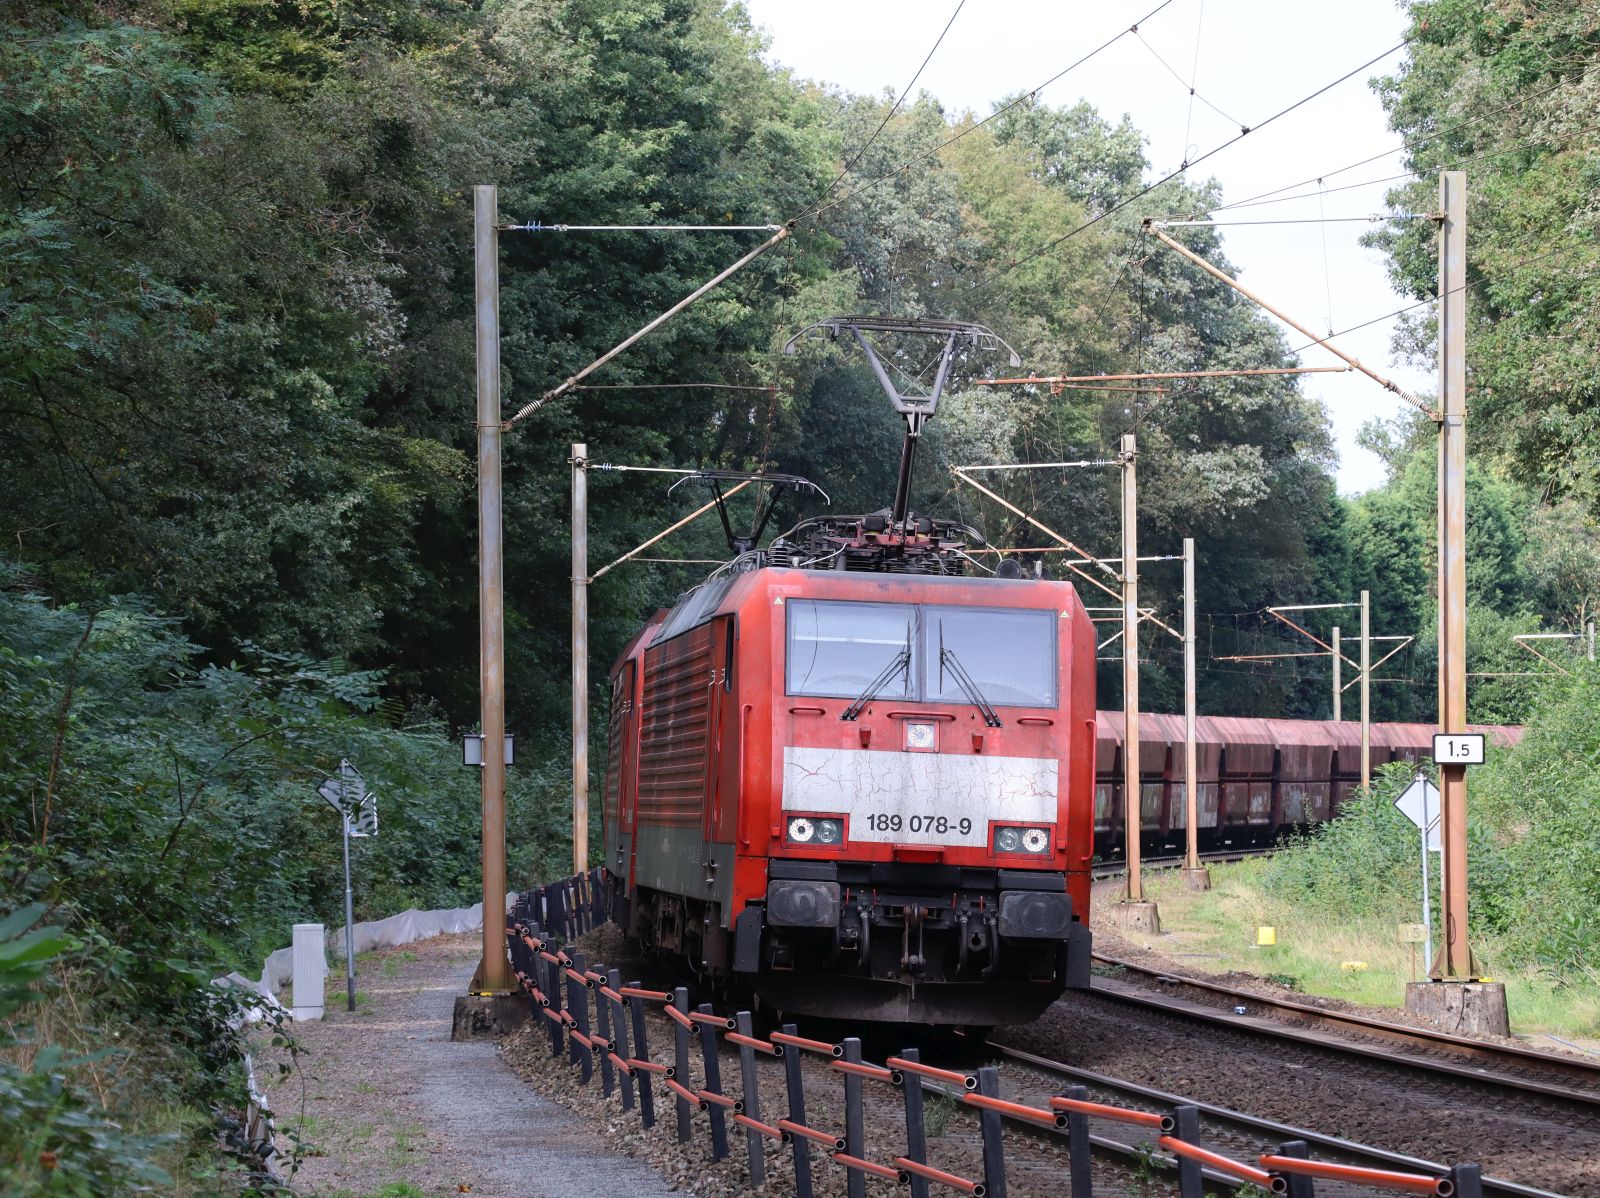 DB Cargo Lokomotive 189 078-9 mit Schwesterlok Bahnbergang Bovenste Molenweg, Venlo 28-09-2023.

DB Cargo locomotief 189 078-9 met zusterloc overweg Bovenste Molenweg, Venlo 28-09-2023.